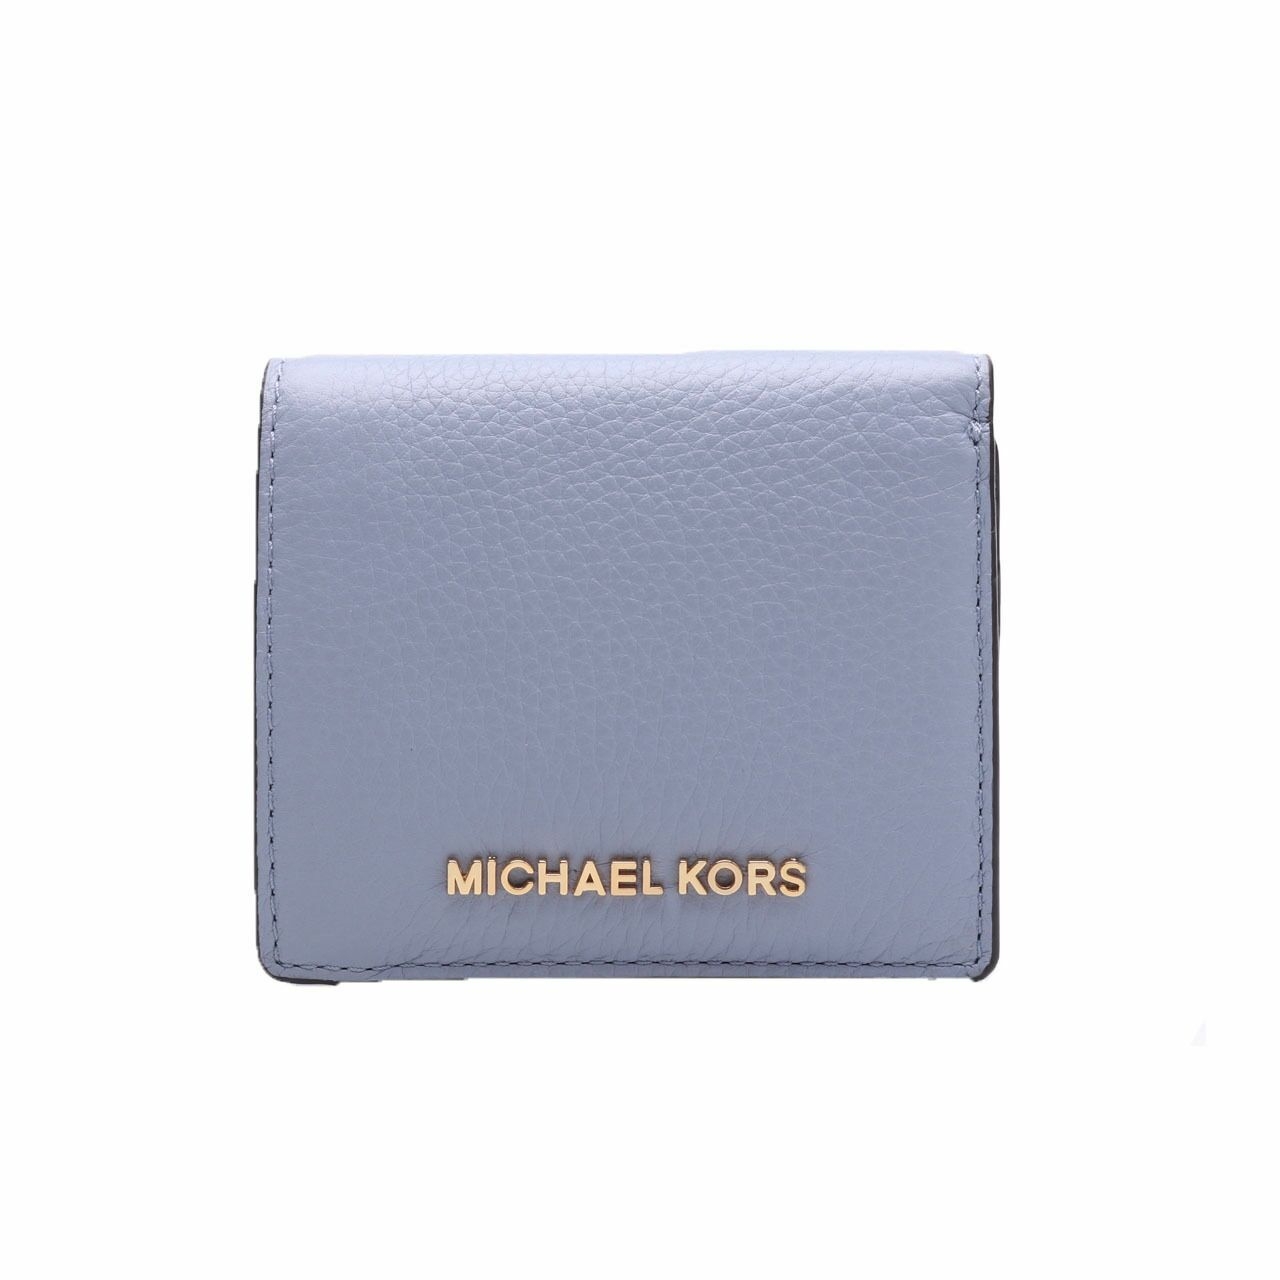 Michael Kors Jet Set Travel Carryall  Pale Blue Card Case Wallet